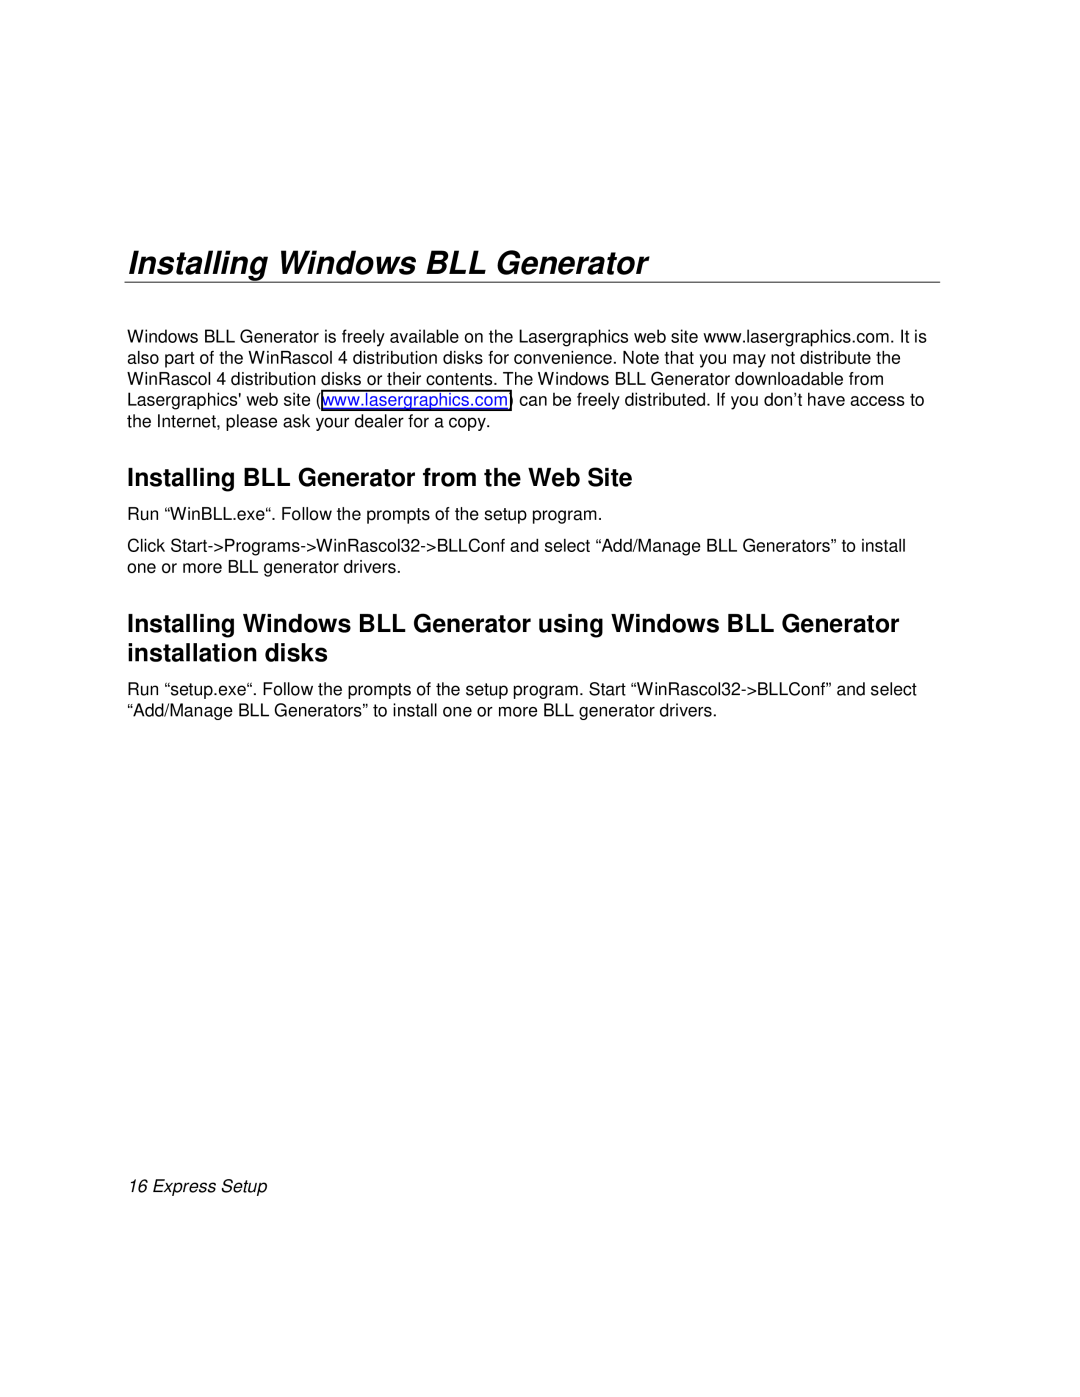 Polaroid manual Installing Windows BLL Generator, Installing BLL Generator from the Web Site, Express Setup 